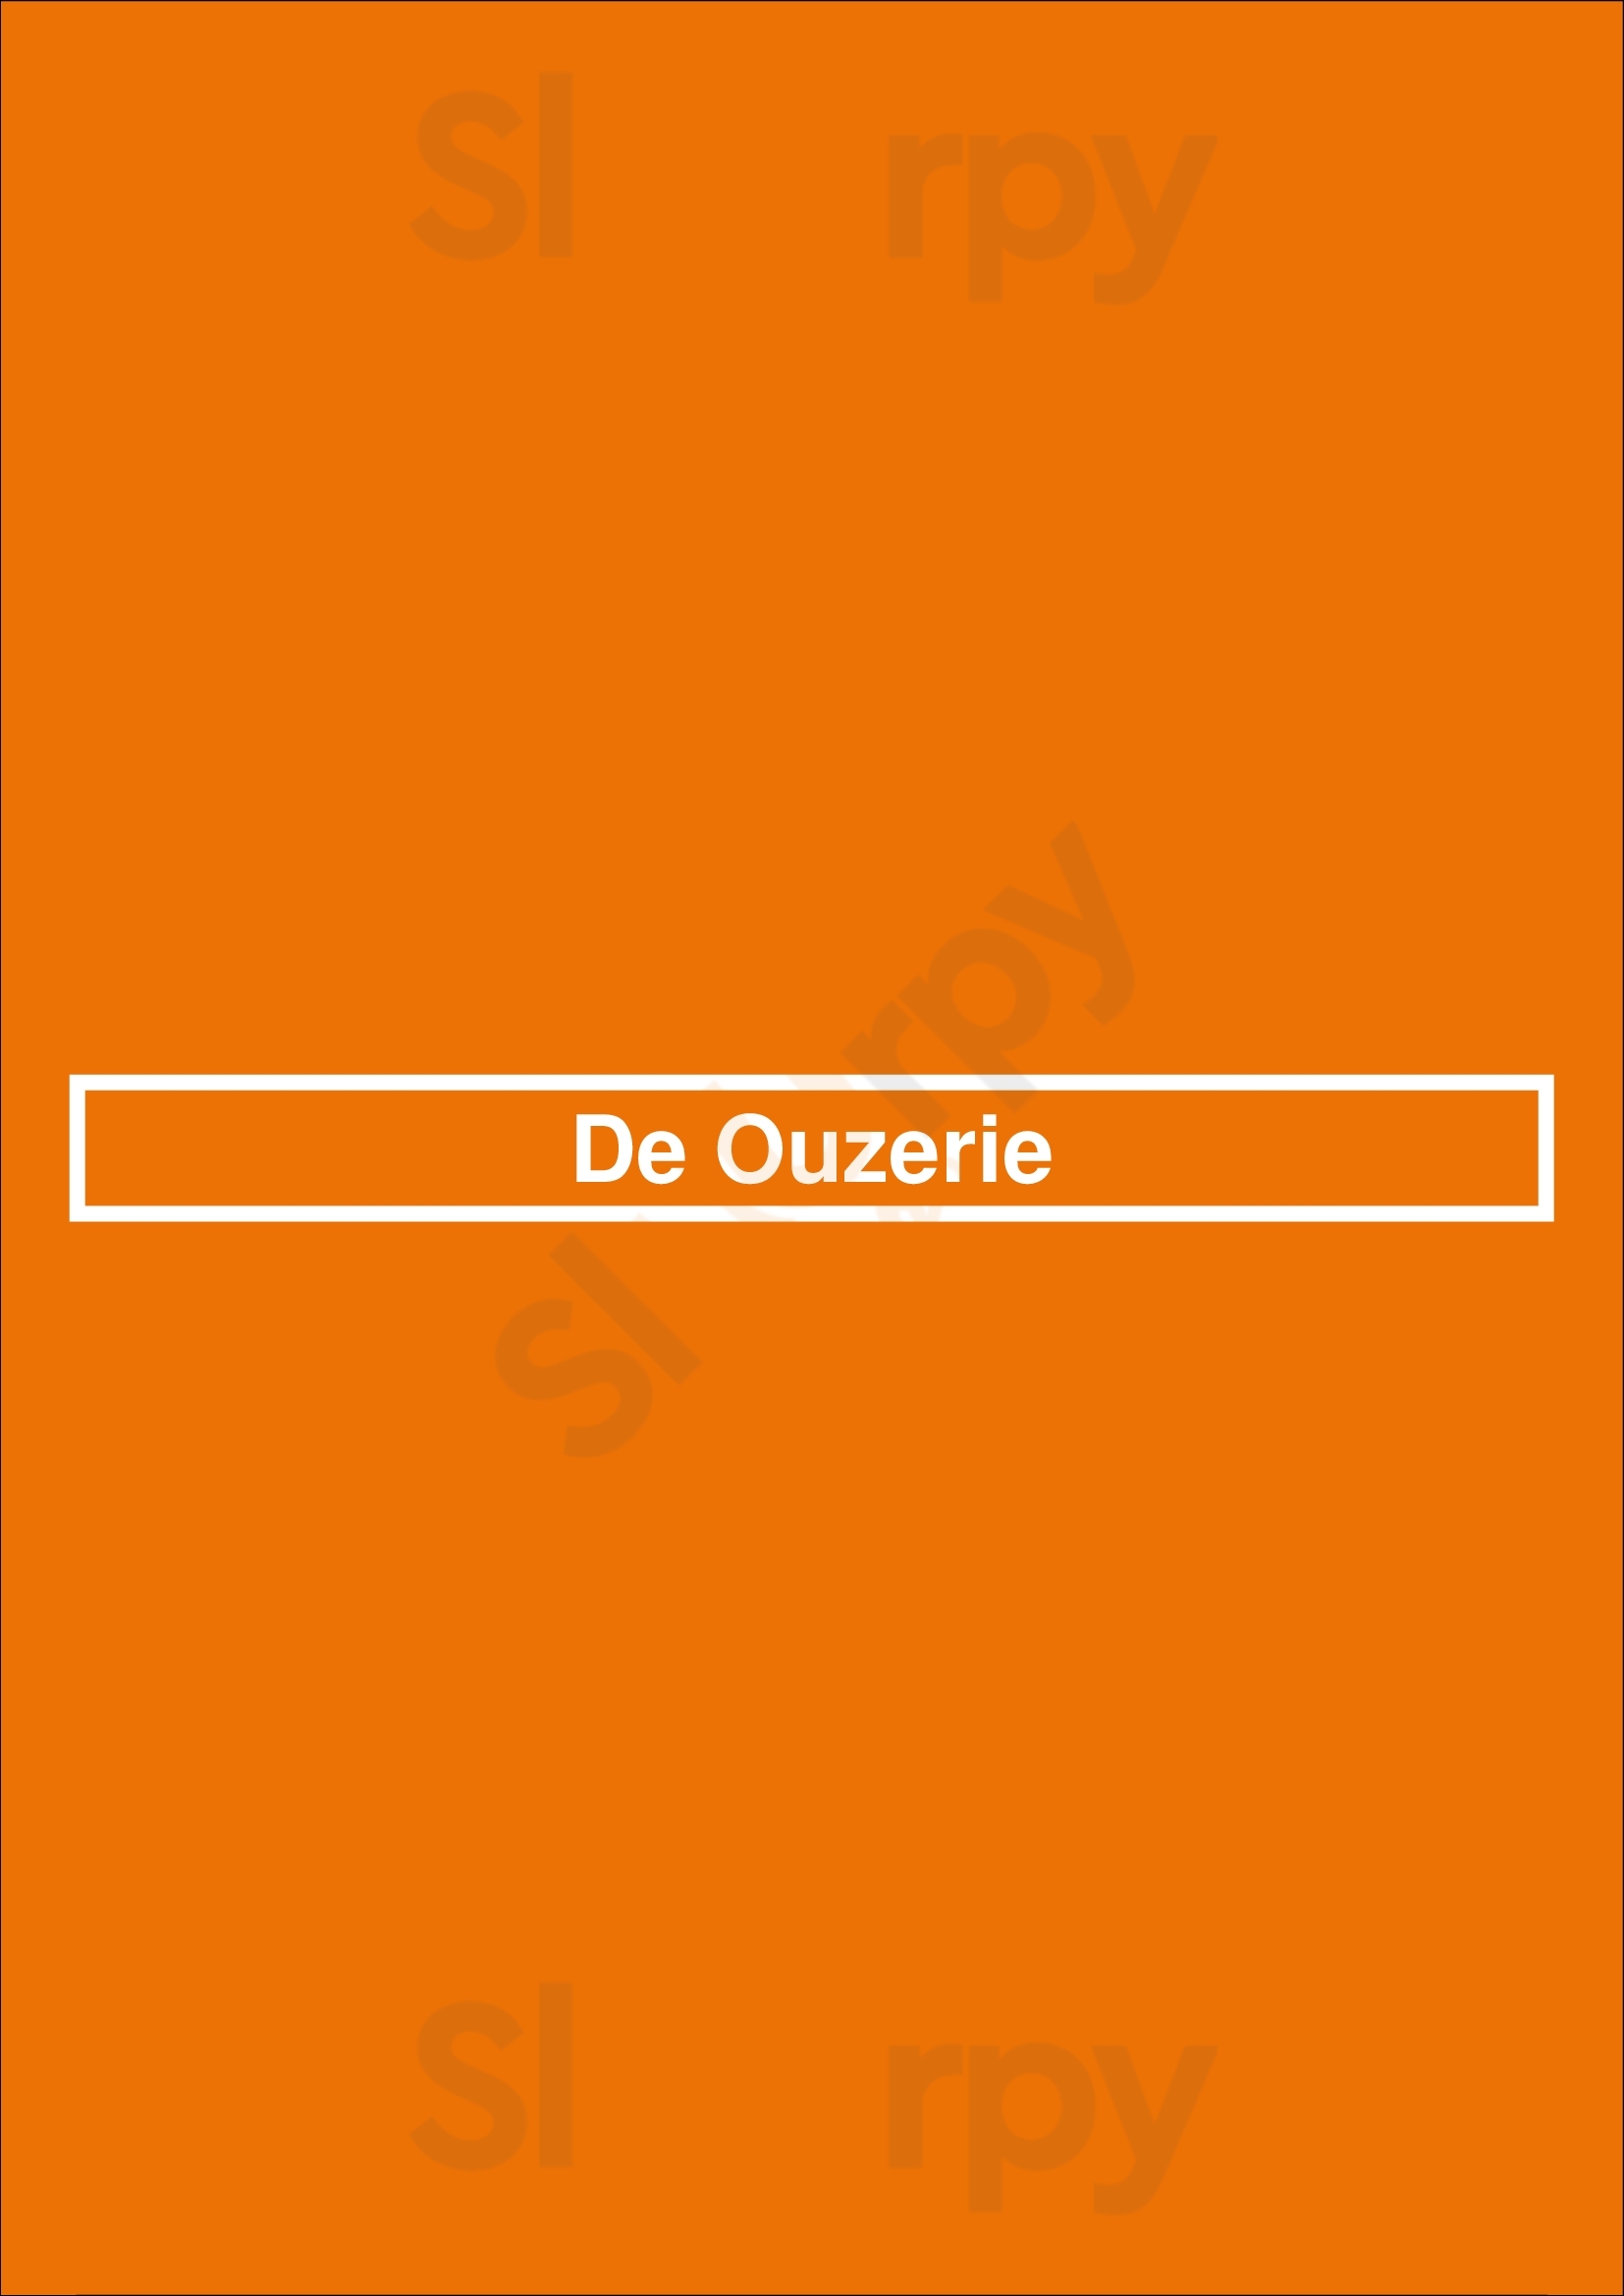 De Ouzerie Utrecht Menu - 1